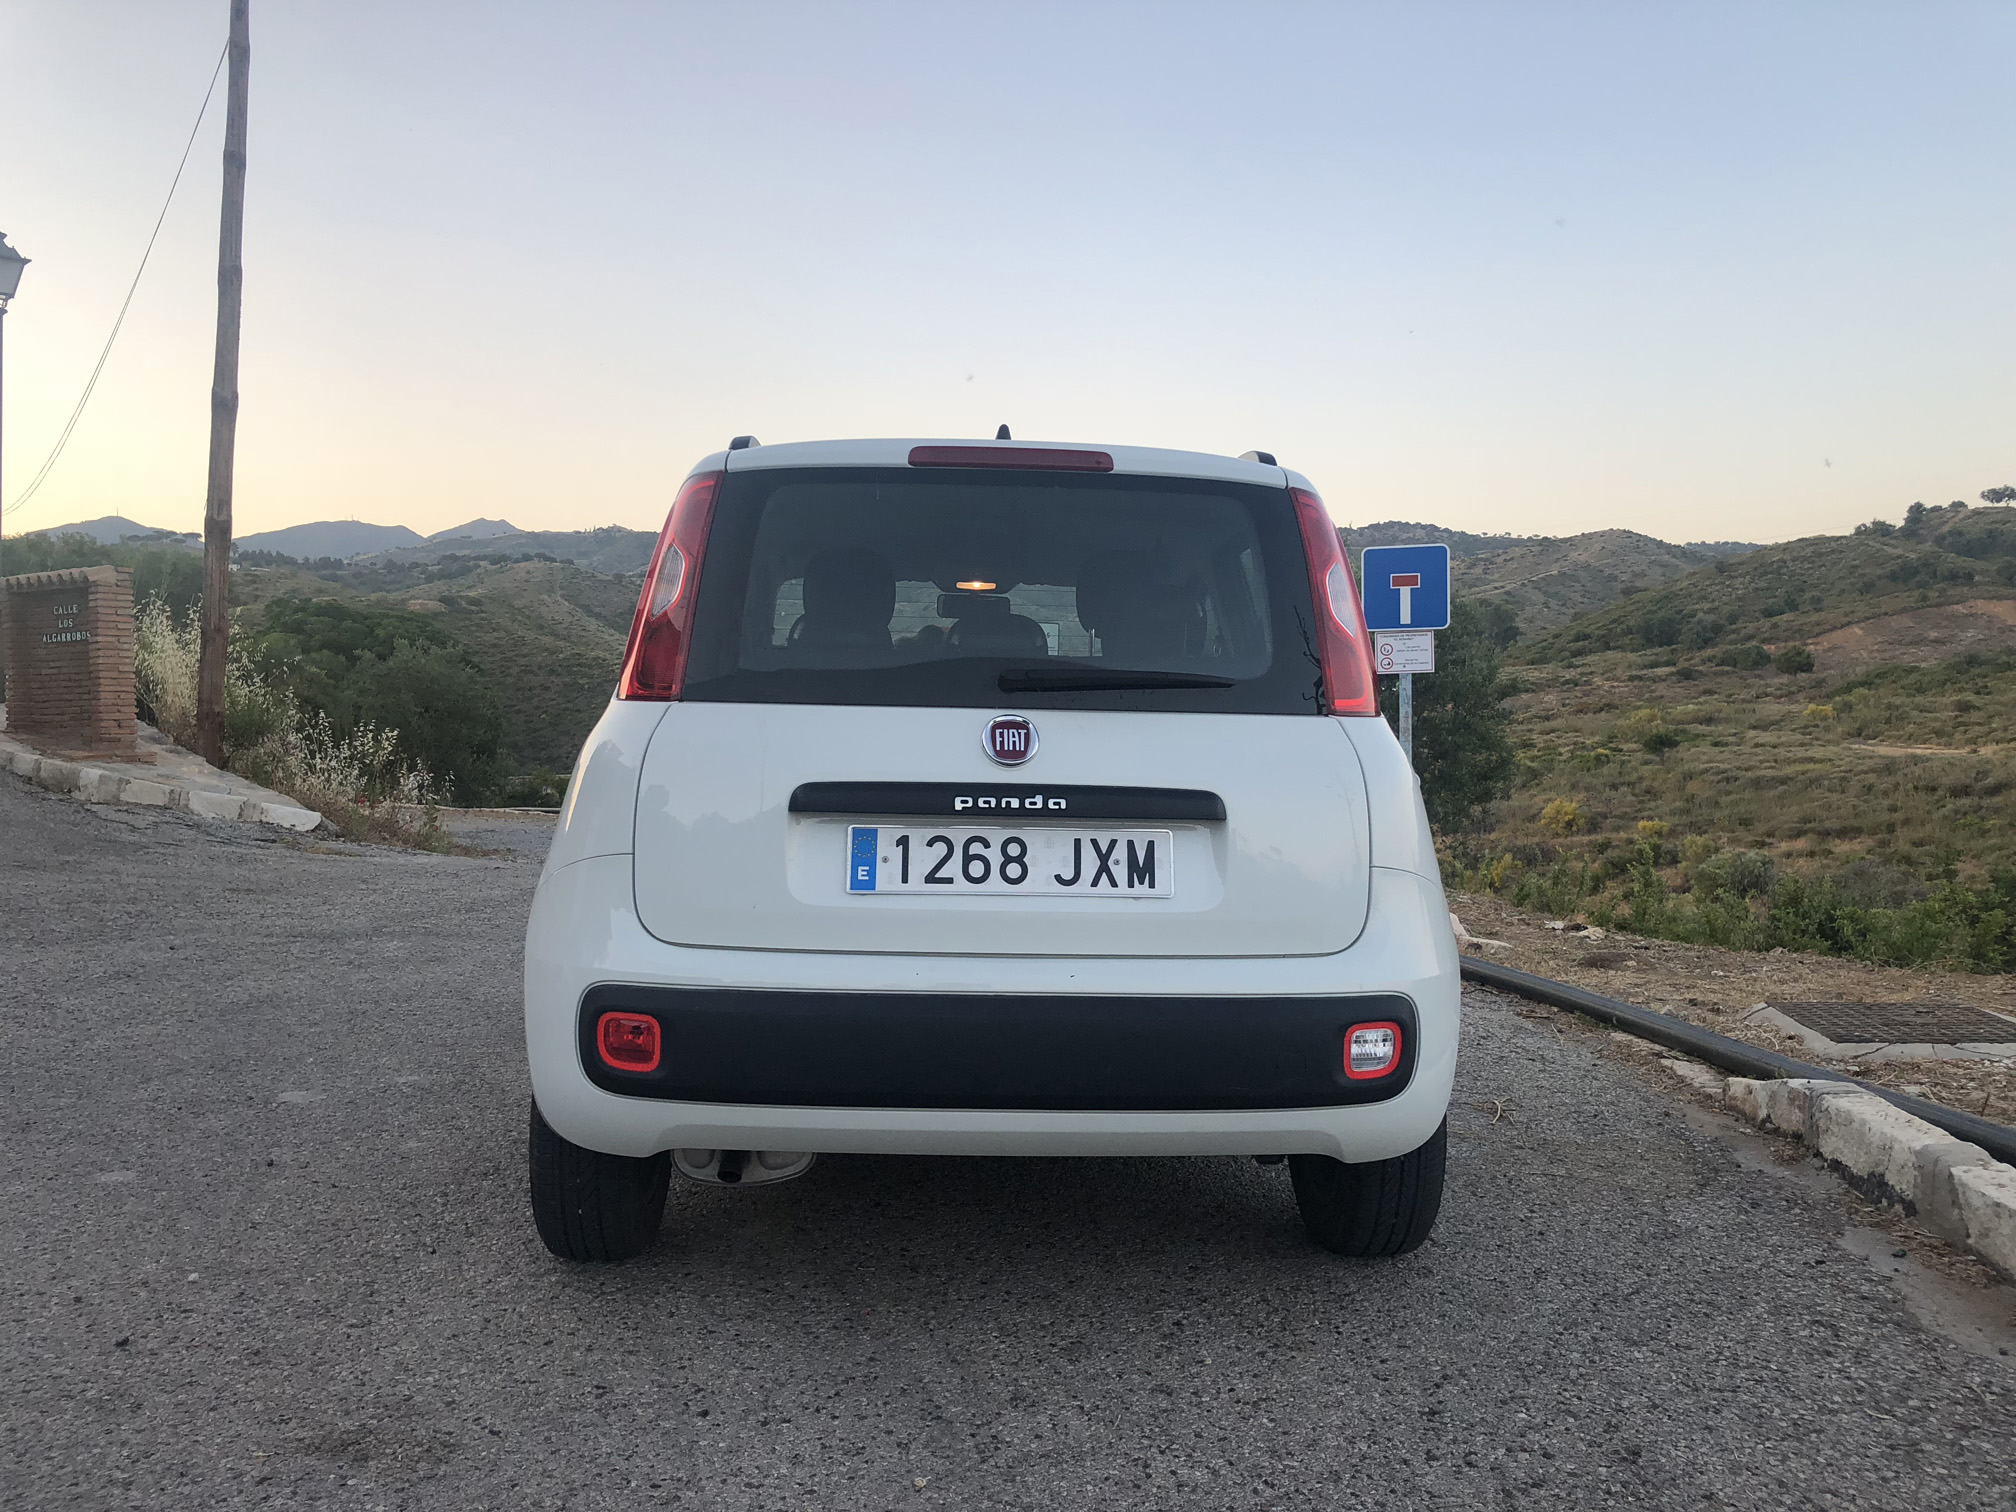 Fiat3_edit